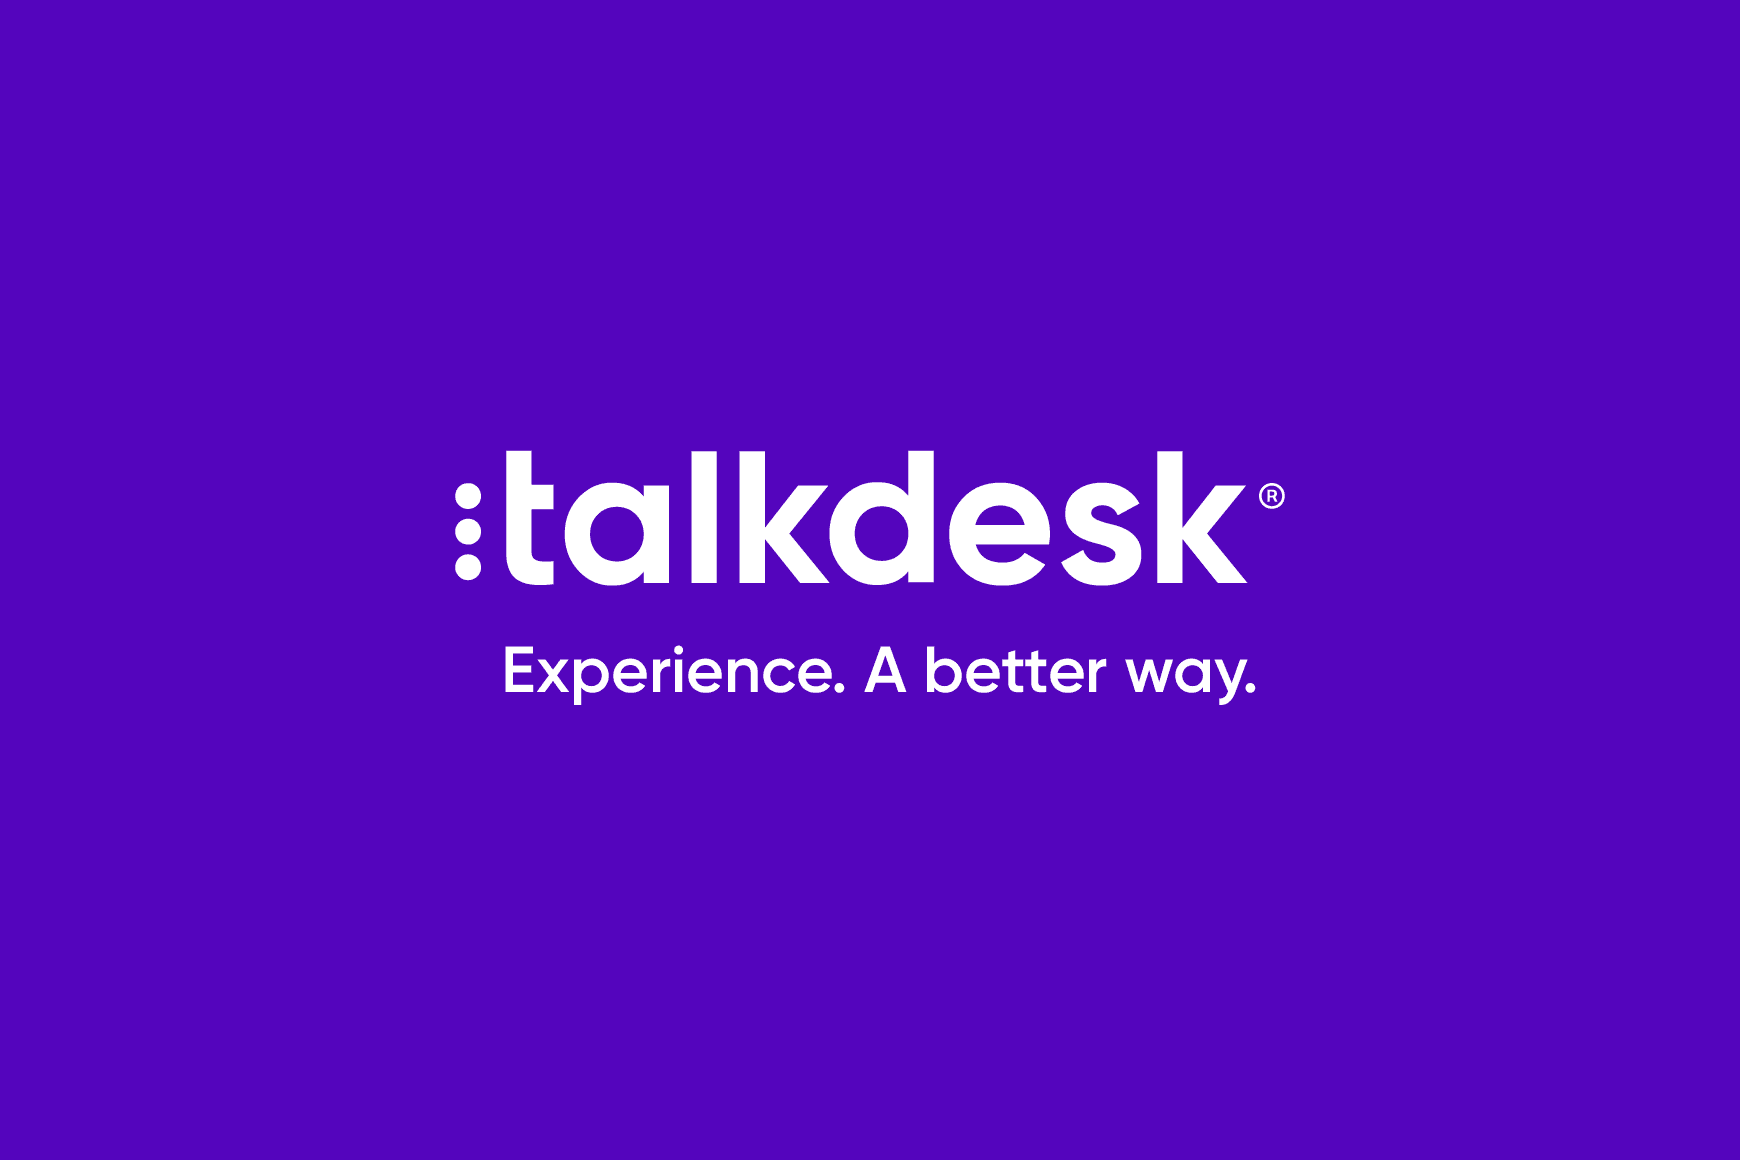 New Talkdesk Brand